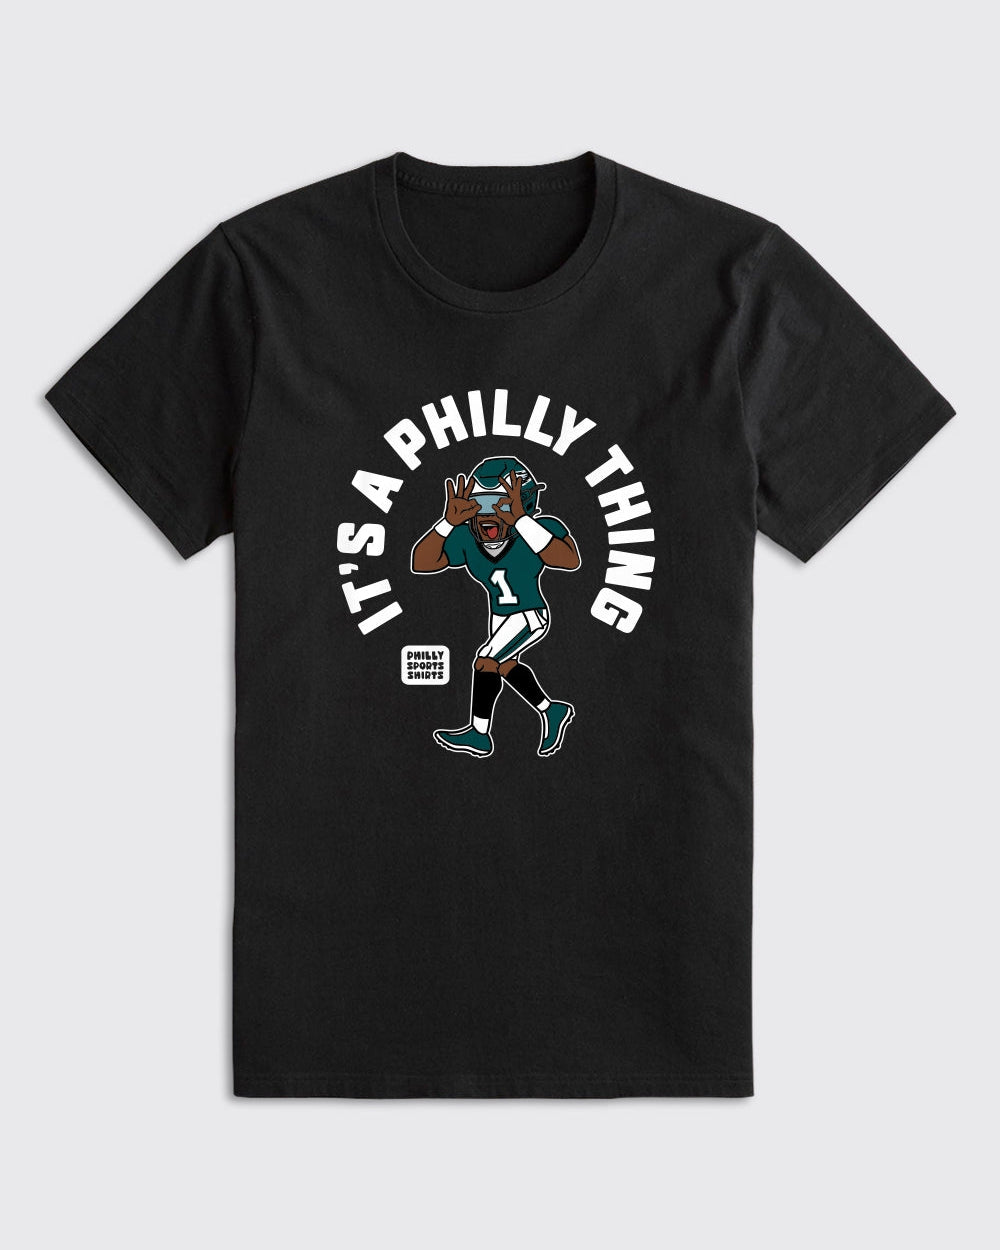 Black Philadelphia Phillies MLB Shirts for sale